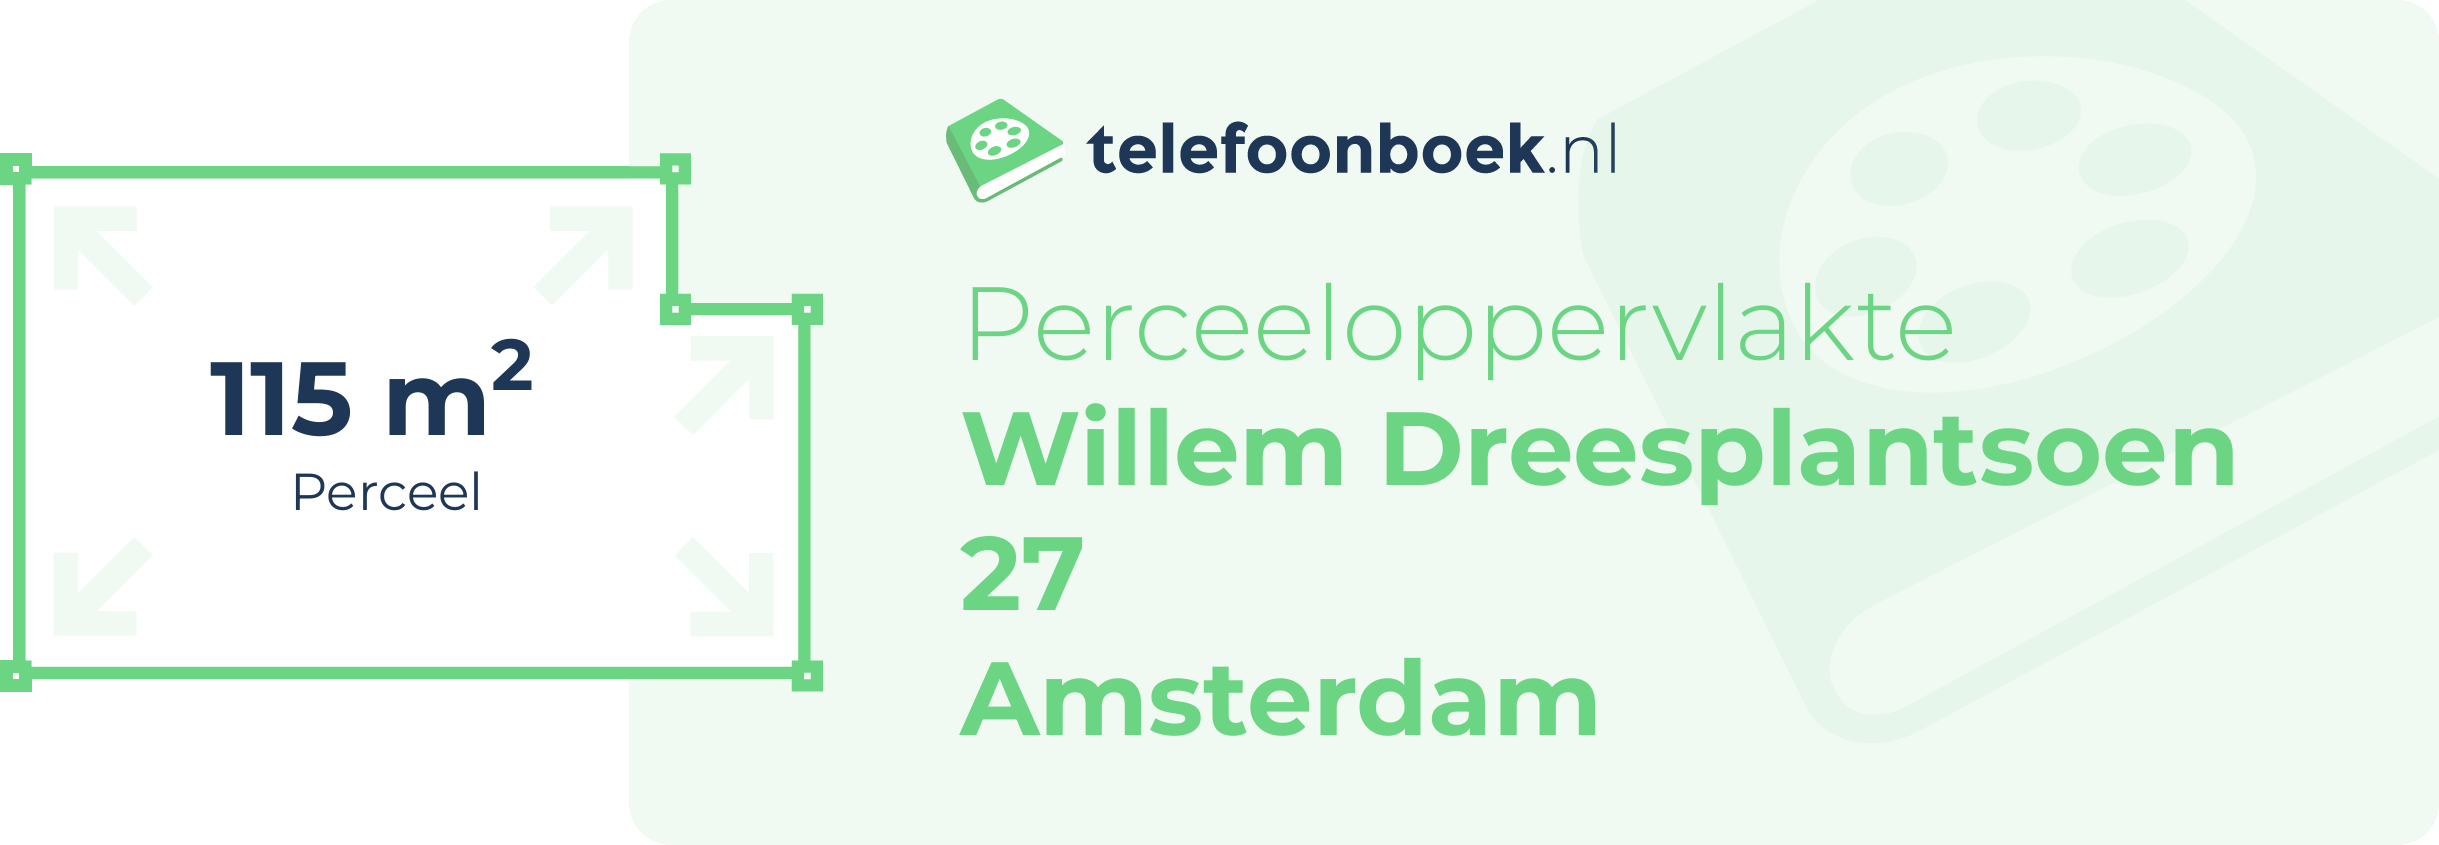 Perceeloppervlakte Willem Dreesplantsoen 27 Amsterdam